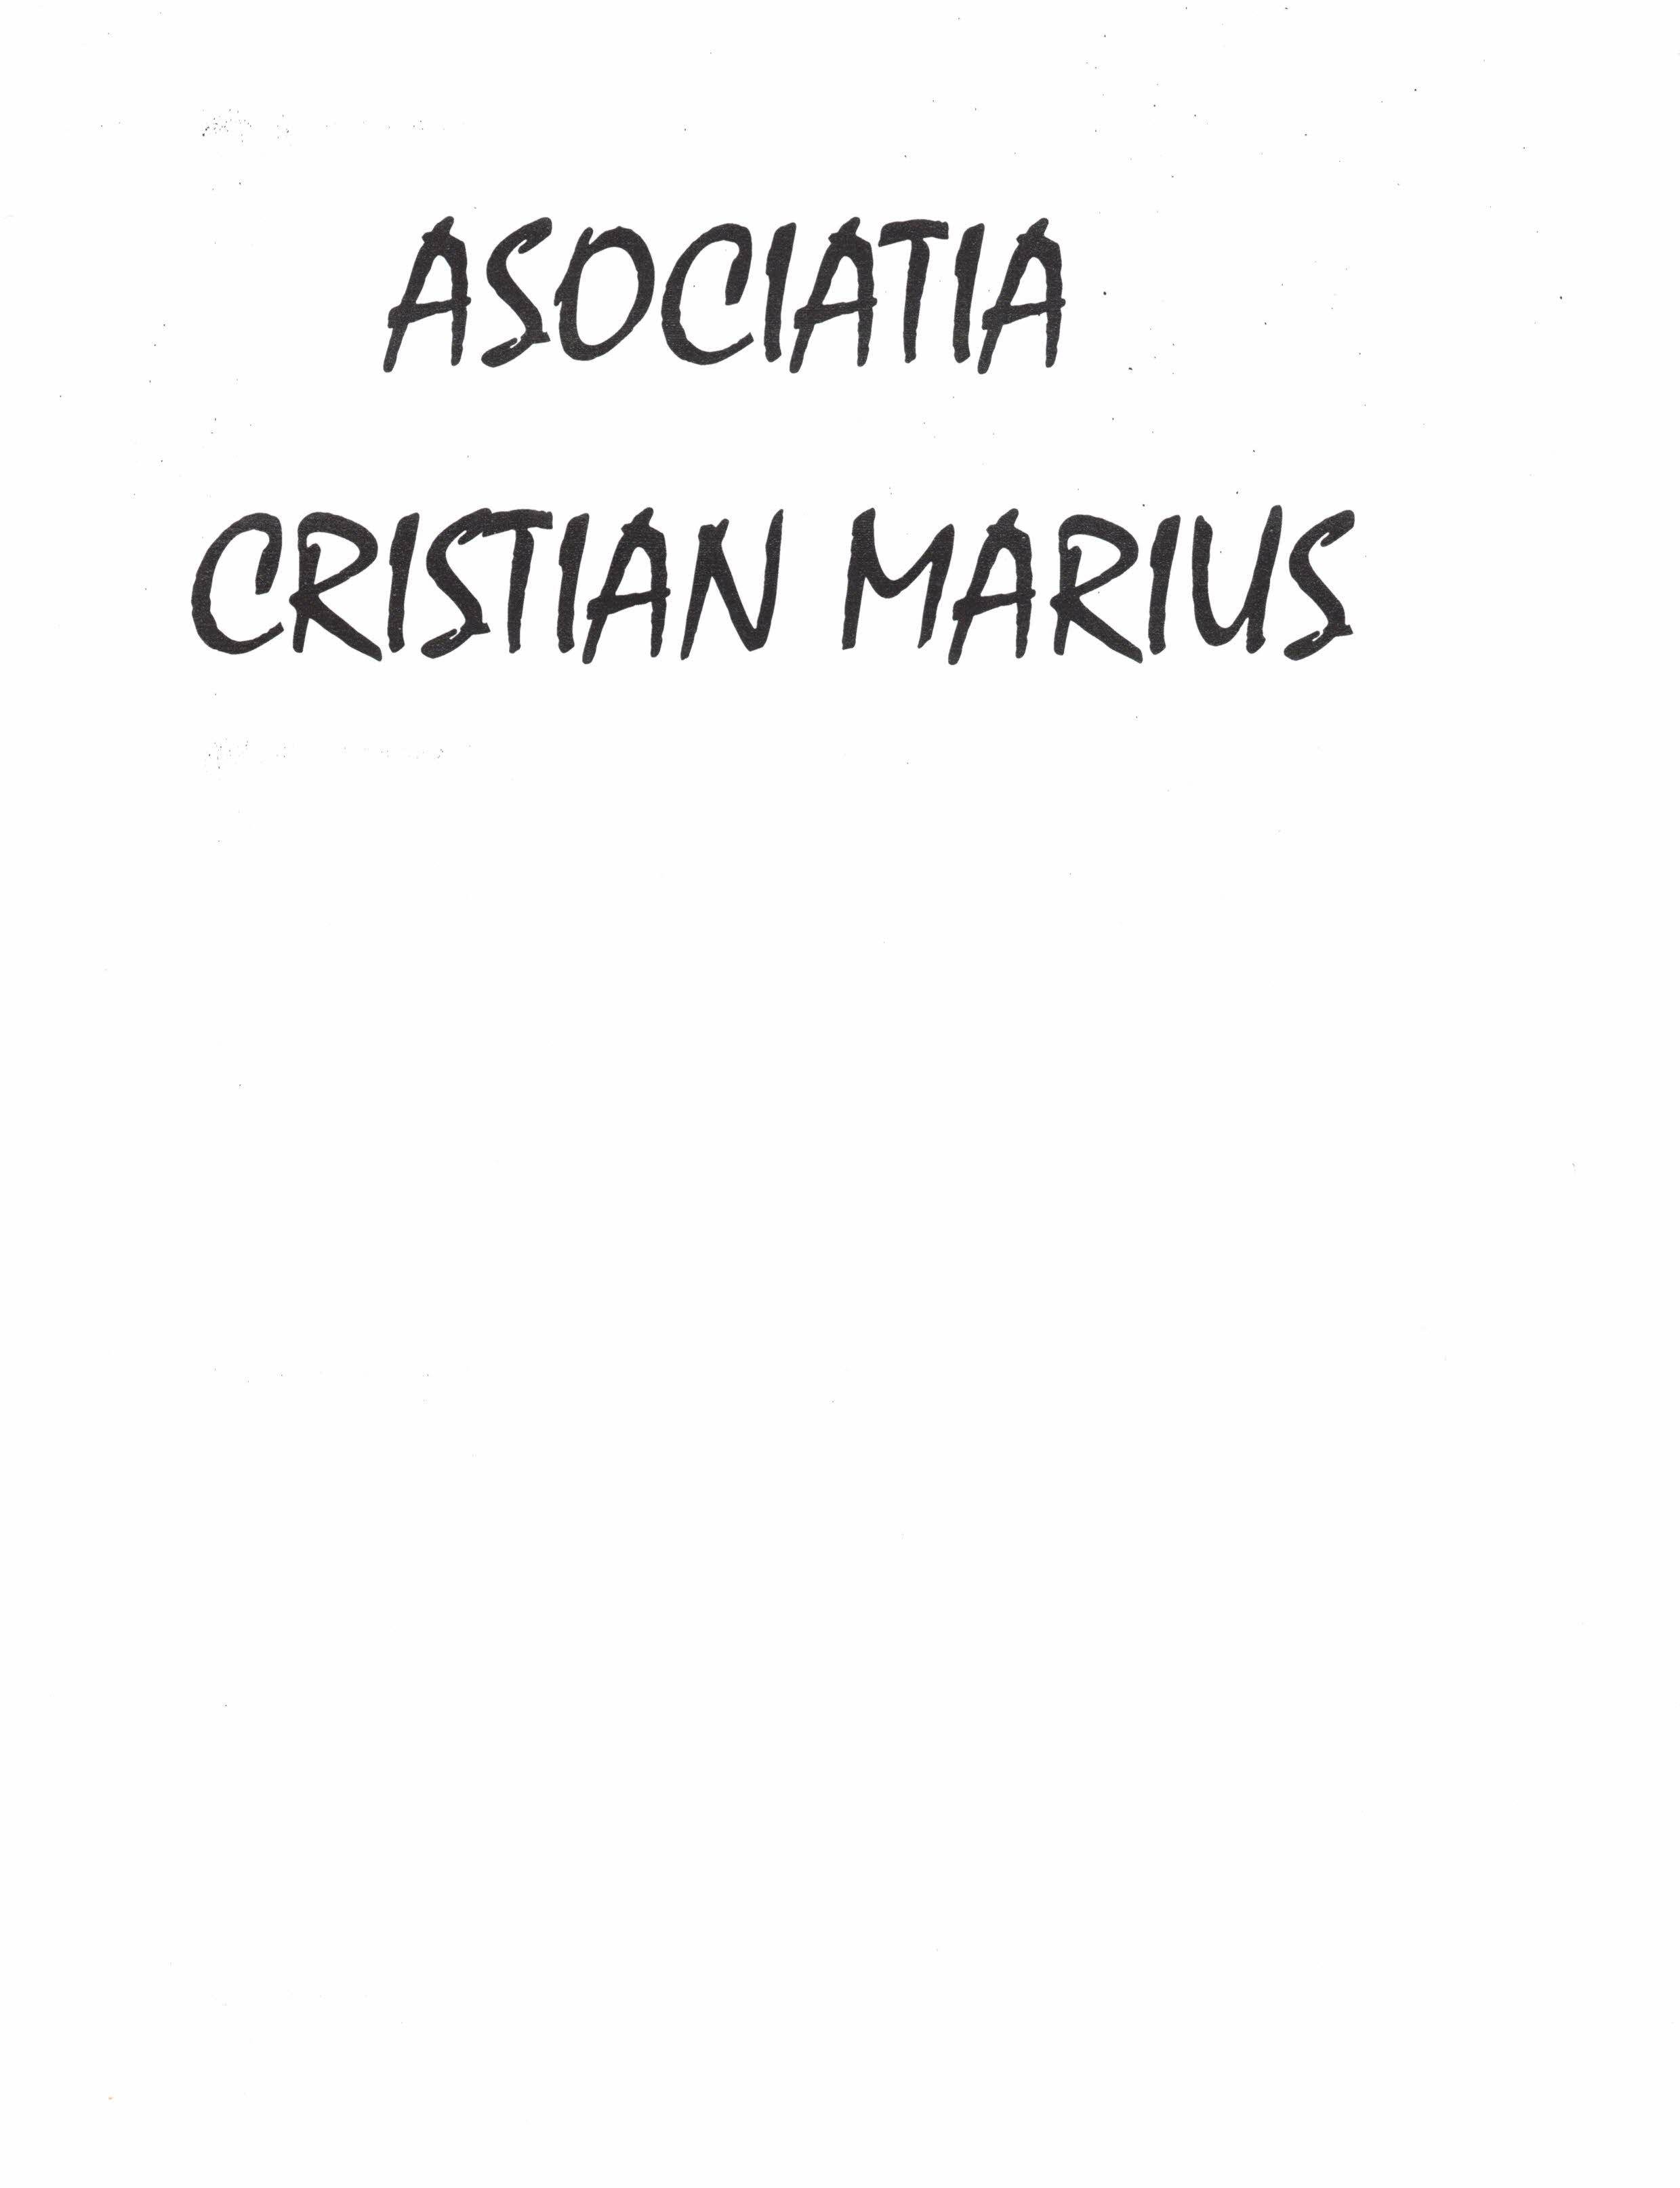 ASOCIATIA CRISTIAN MARIUS logo